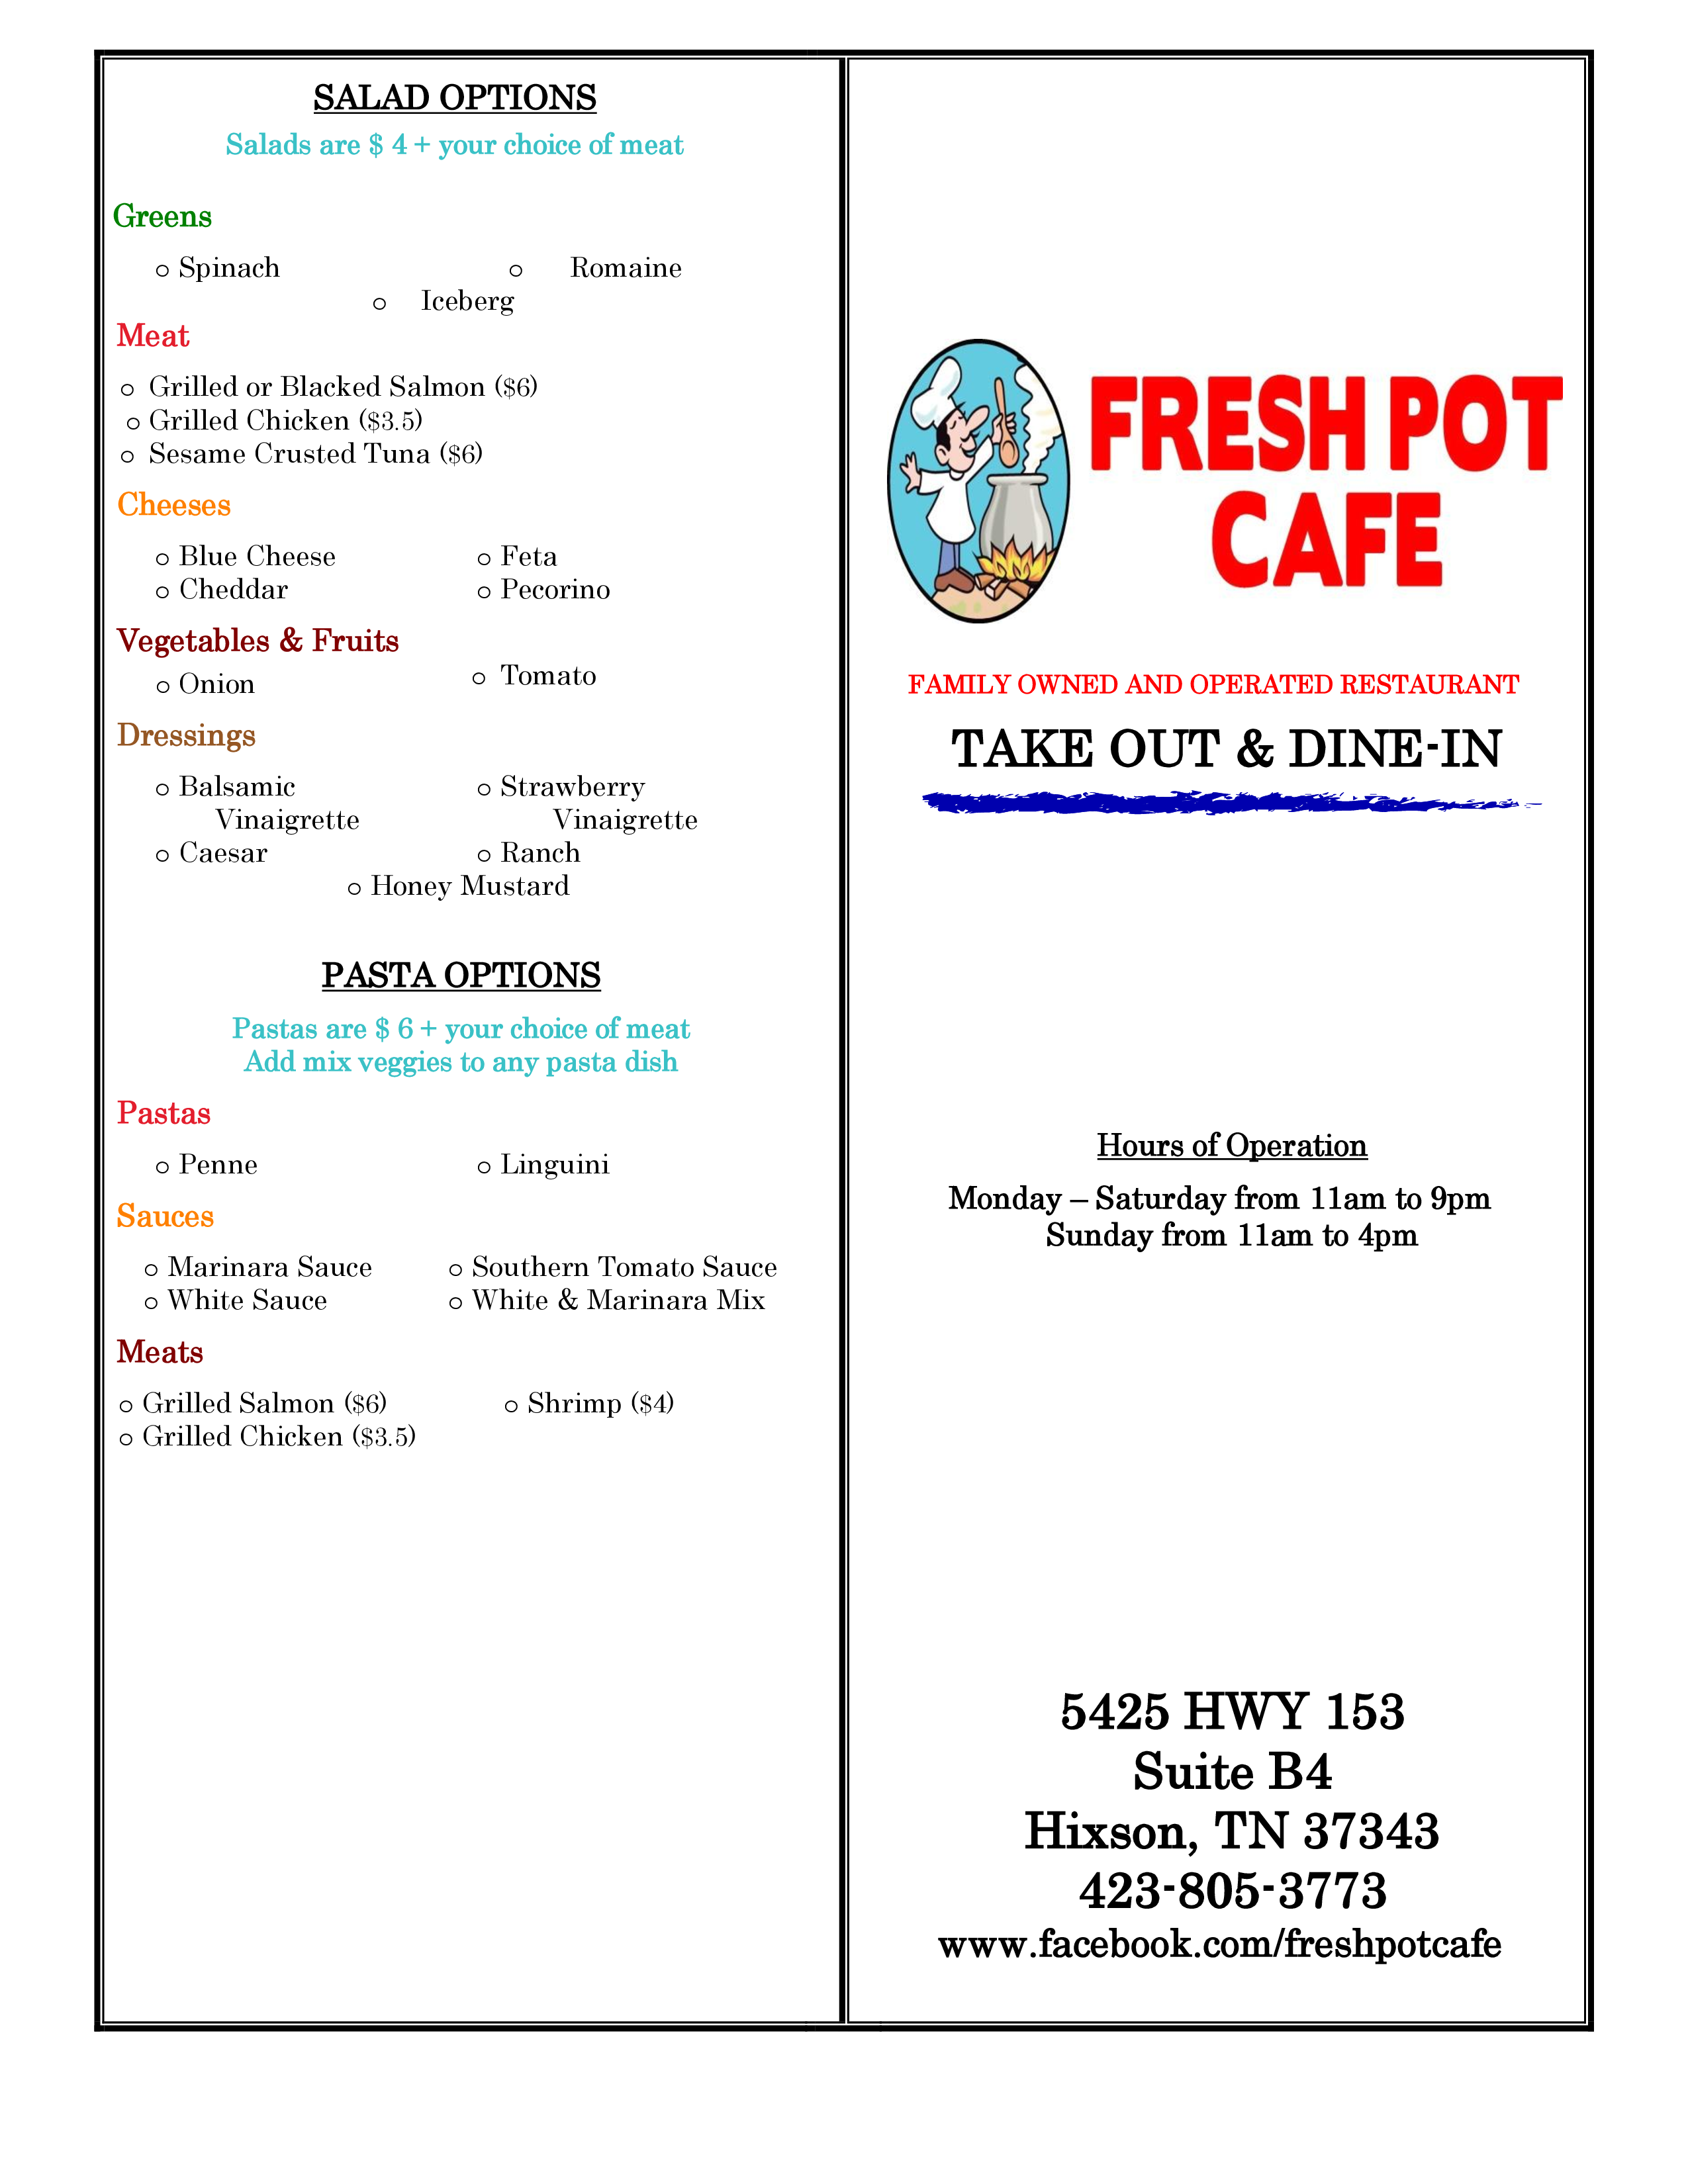 Fresh Pot Cafe Menu, Menu for Fresh Pot Cafe, Hixson, Chattanooga ...